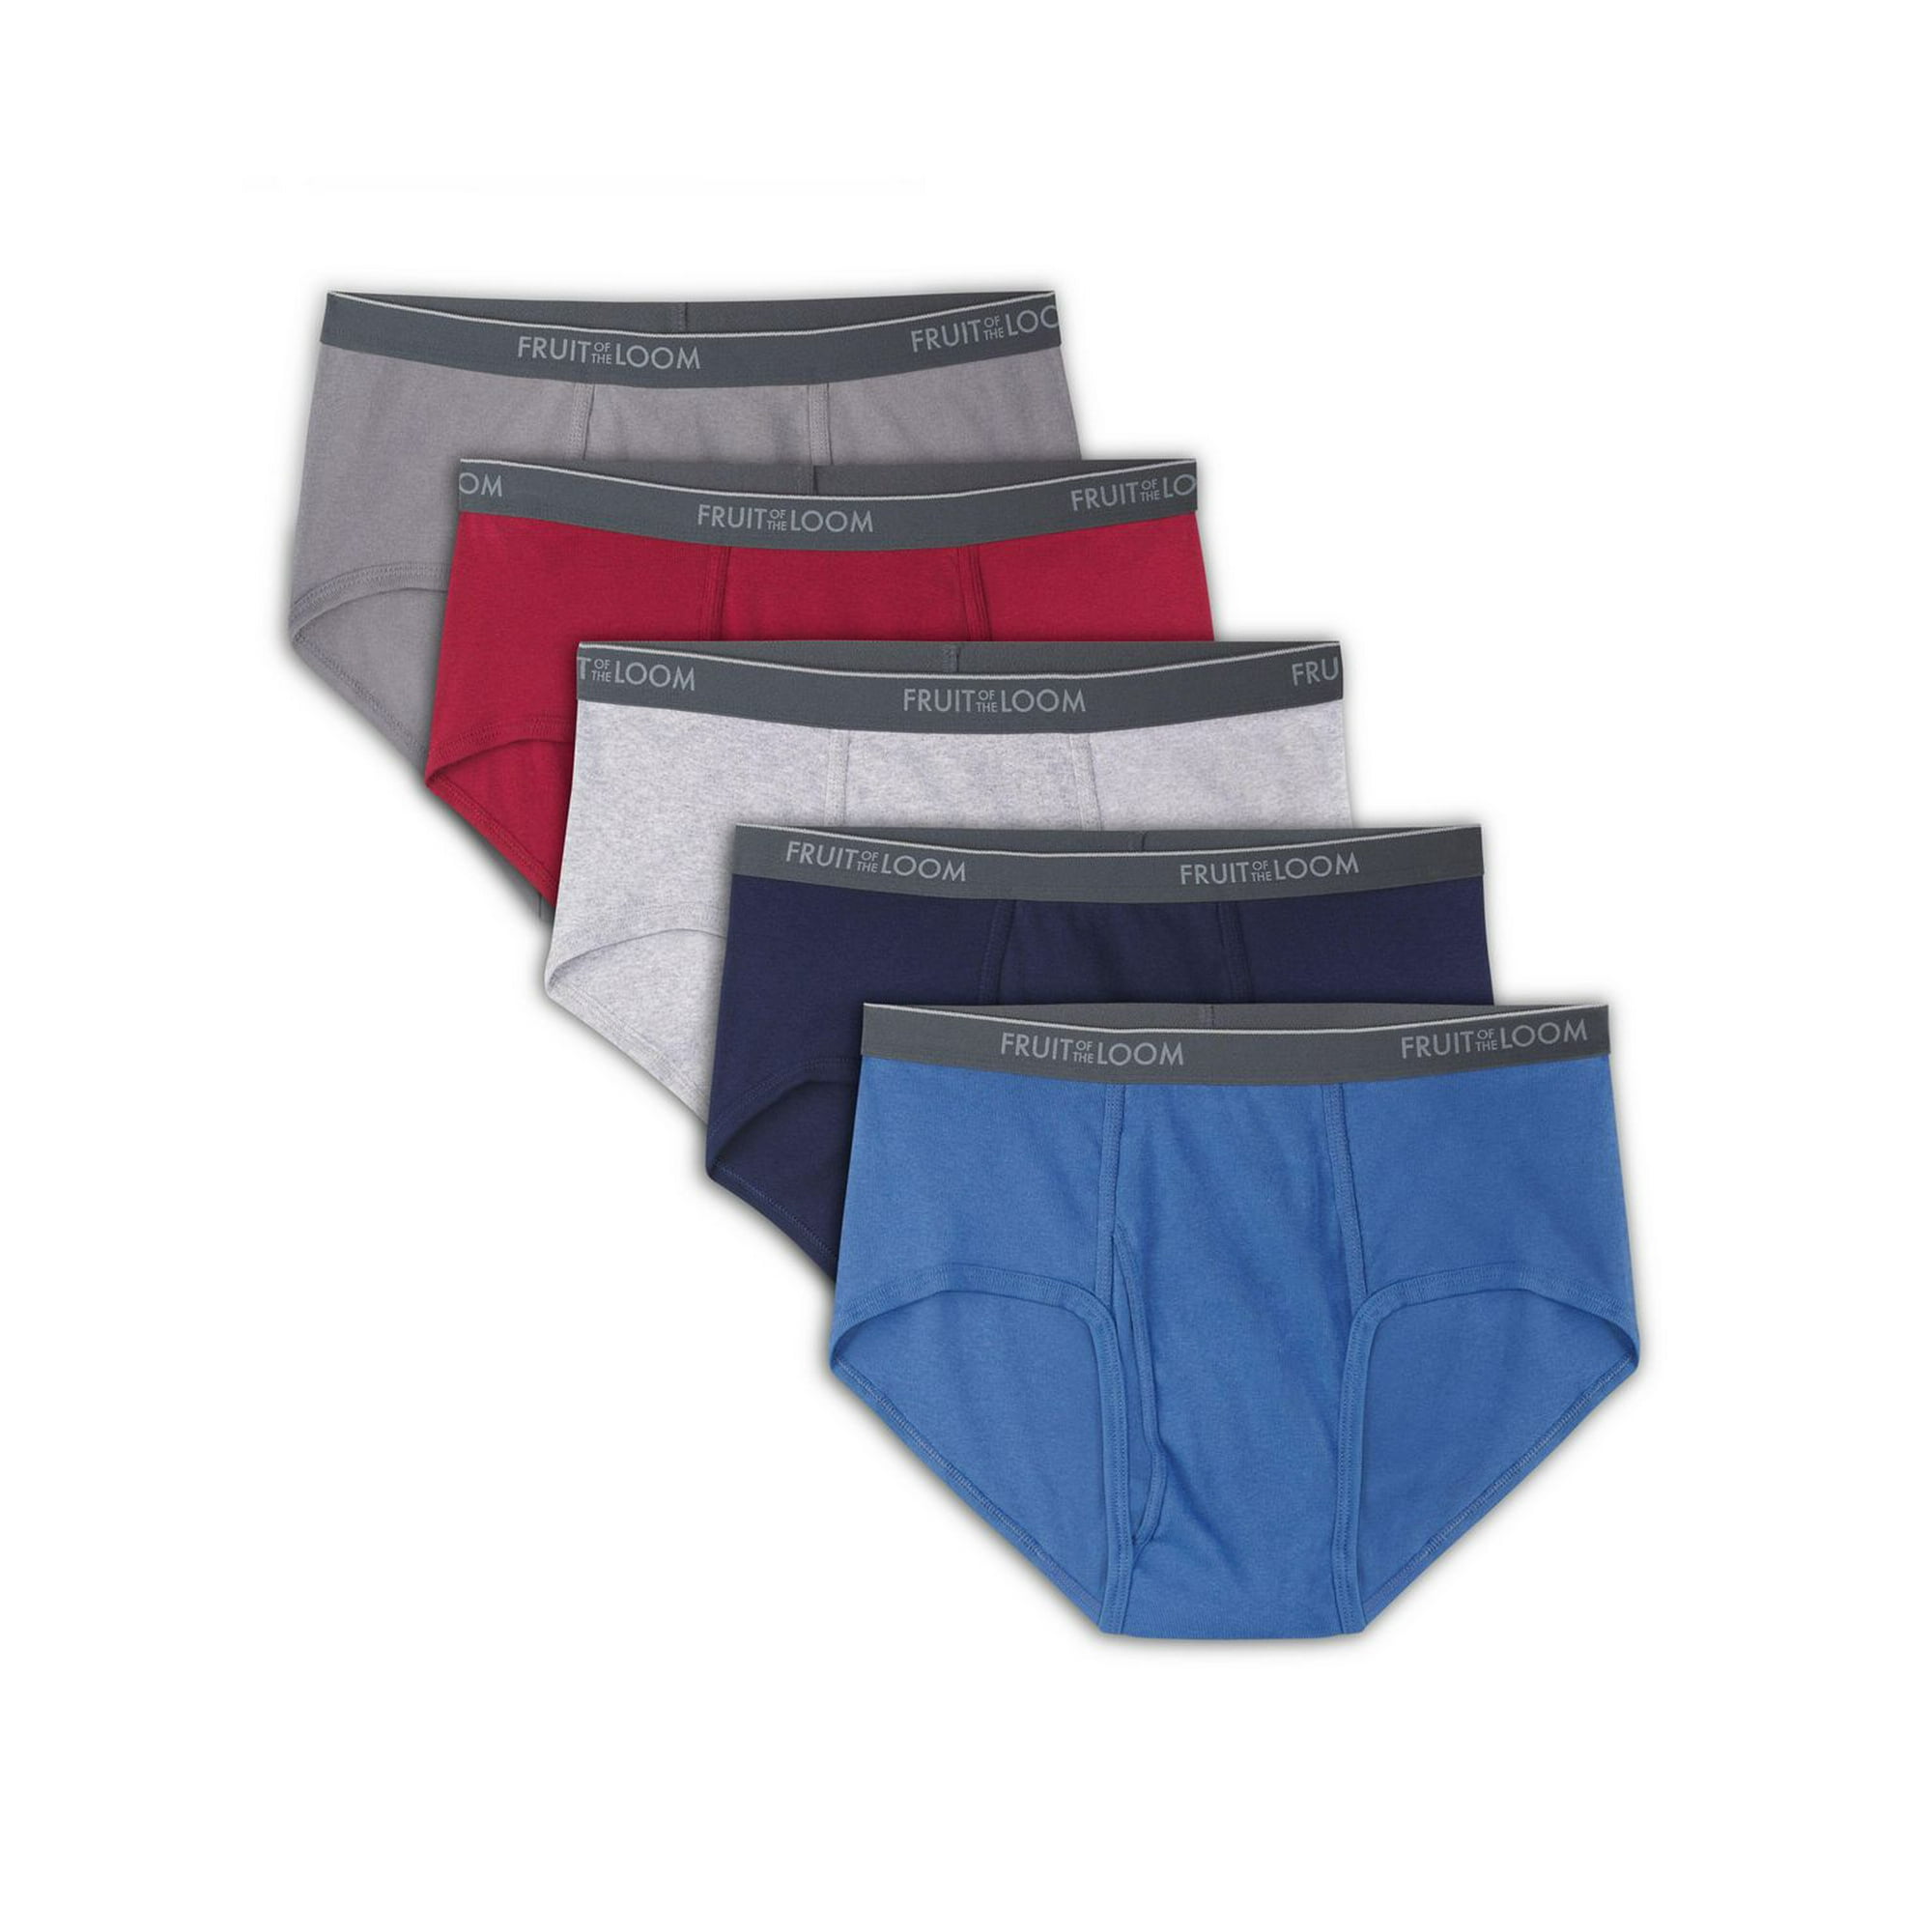 Jockey Life Men's 5 Low Rise Briefs Underwear Small S NEW 100